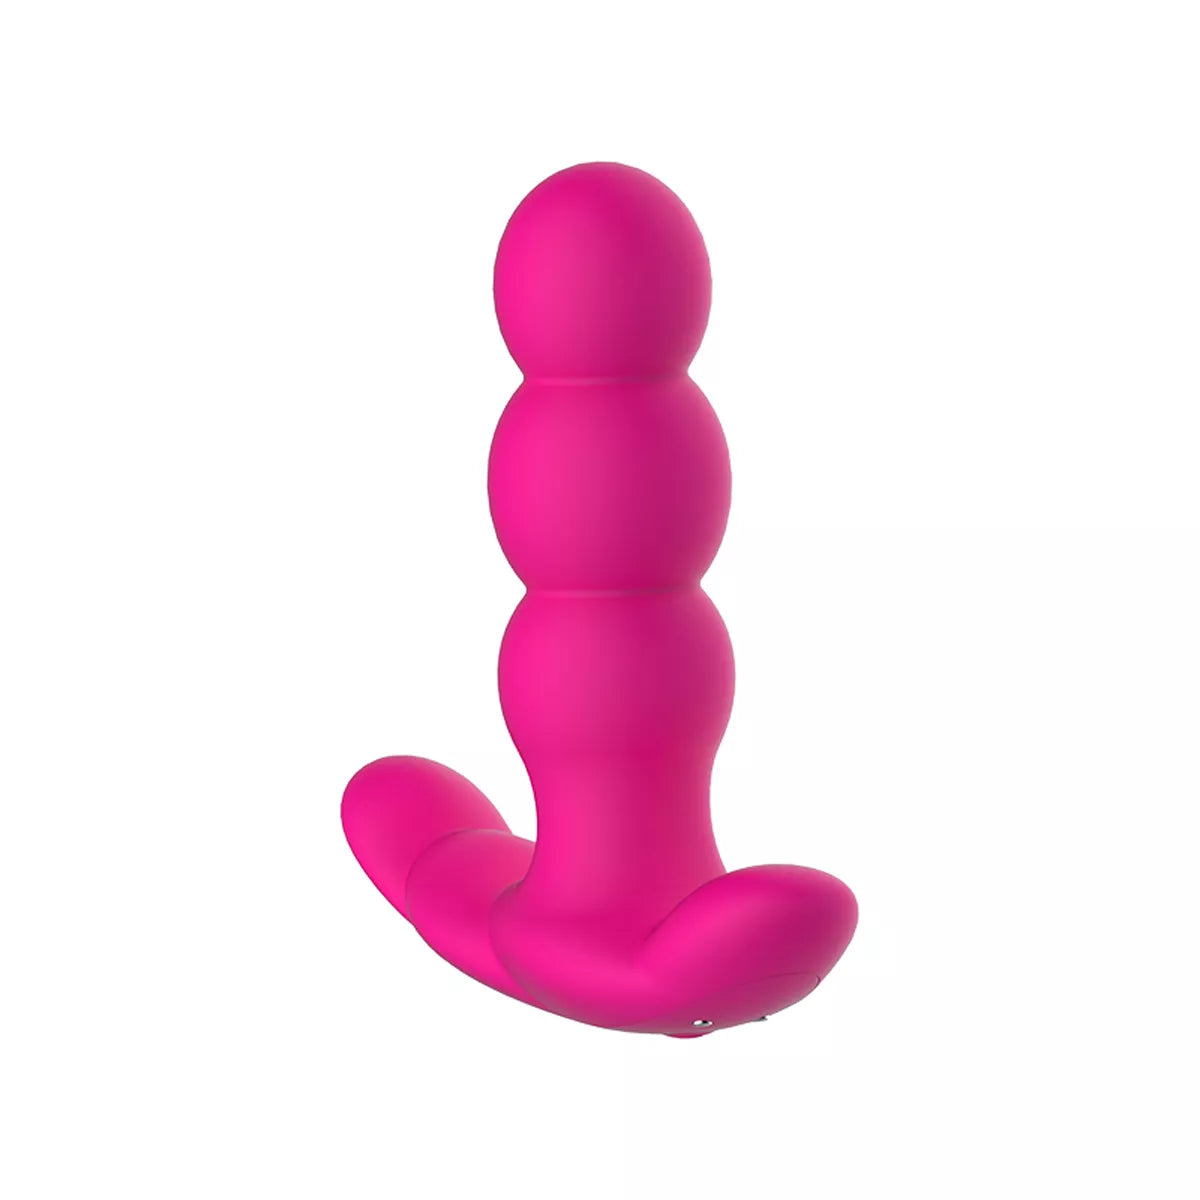 Nalone Pearl Prostaat Vibrator - Roze